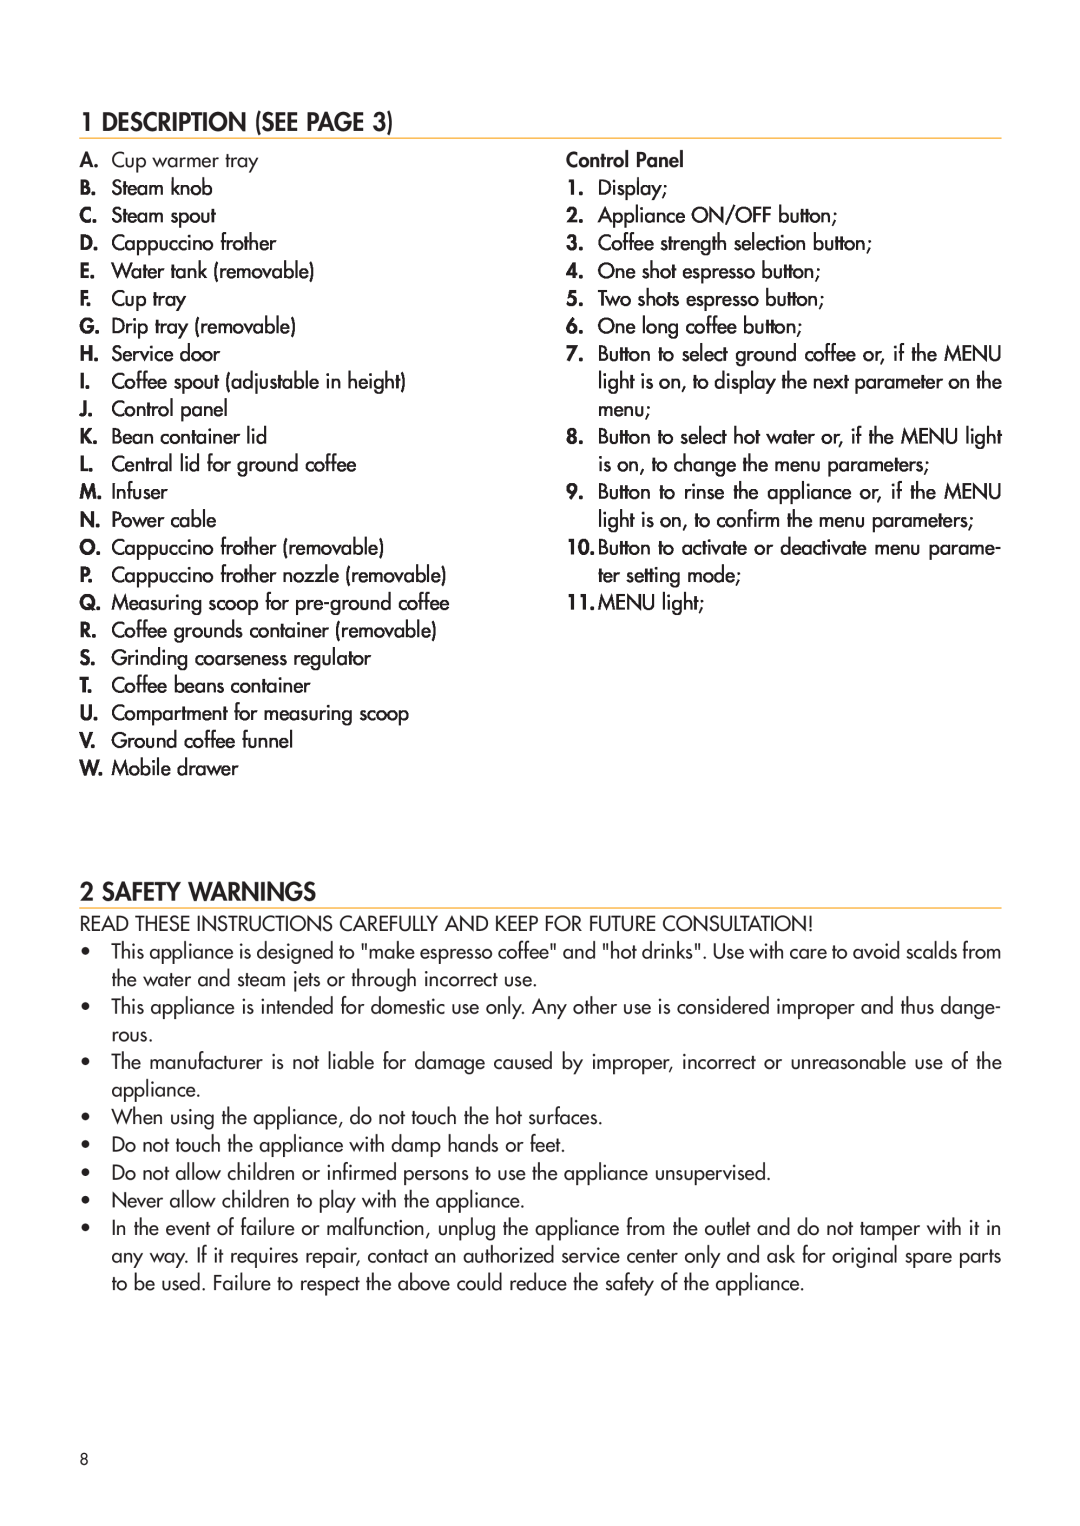 DeLonghi ESAM4400 manual Description See Page, Safety Warnings 